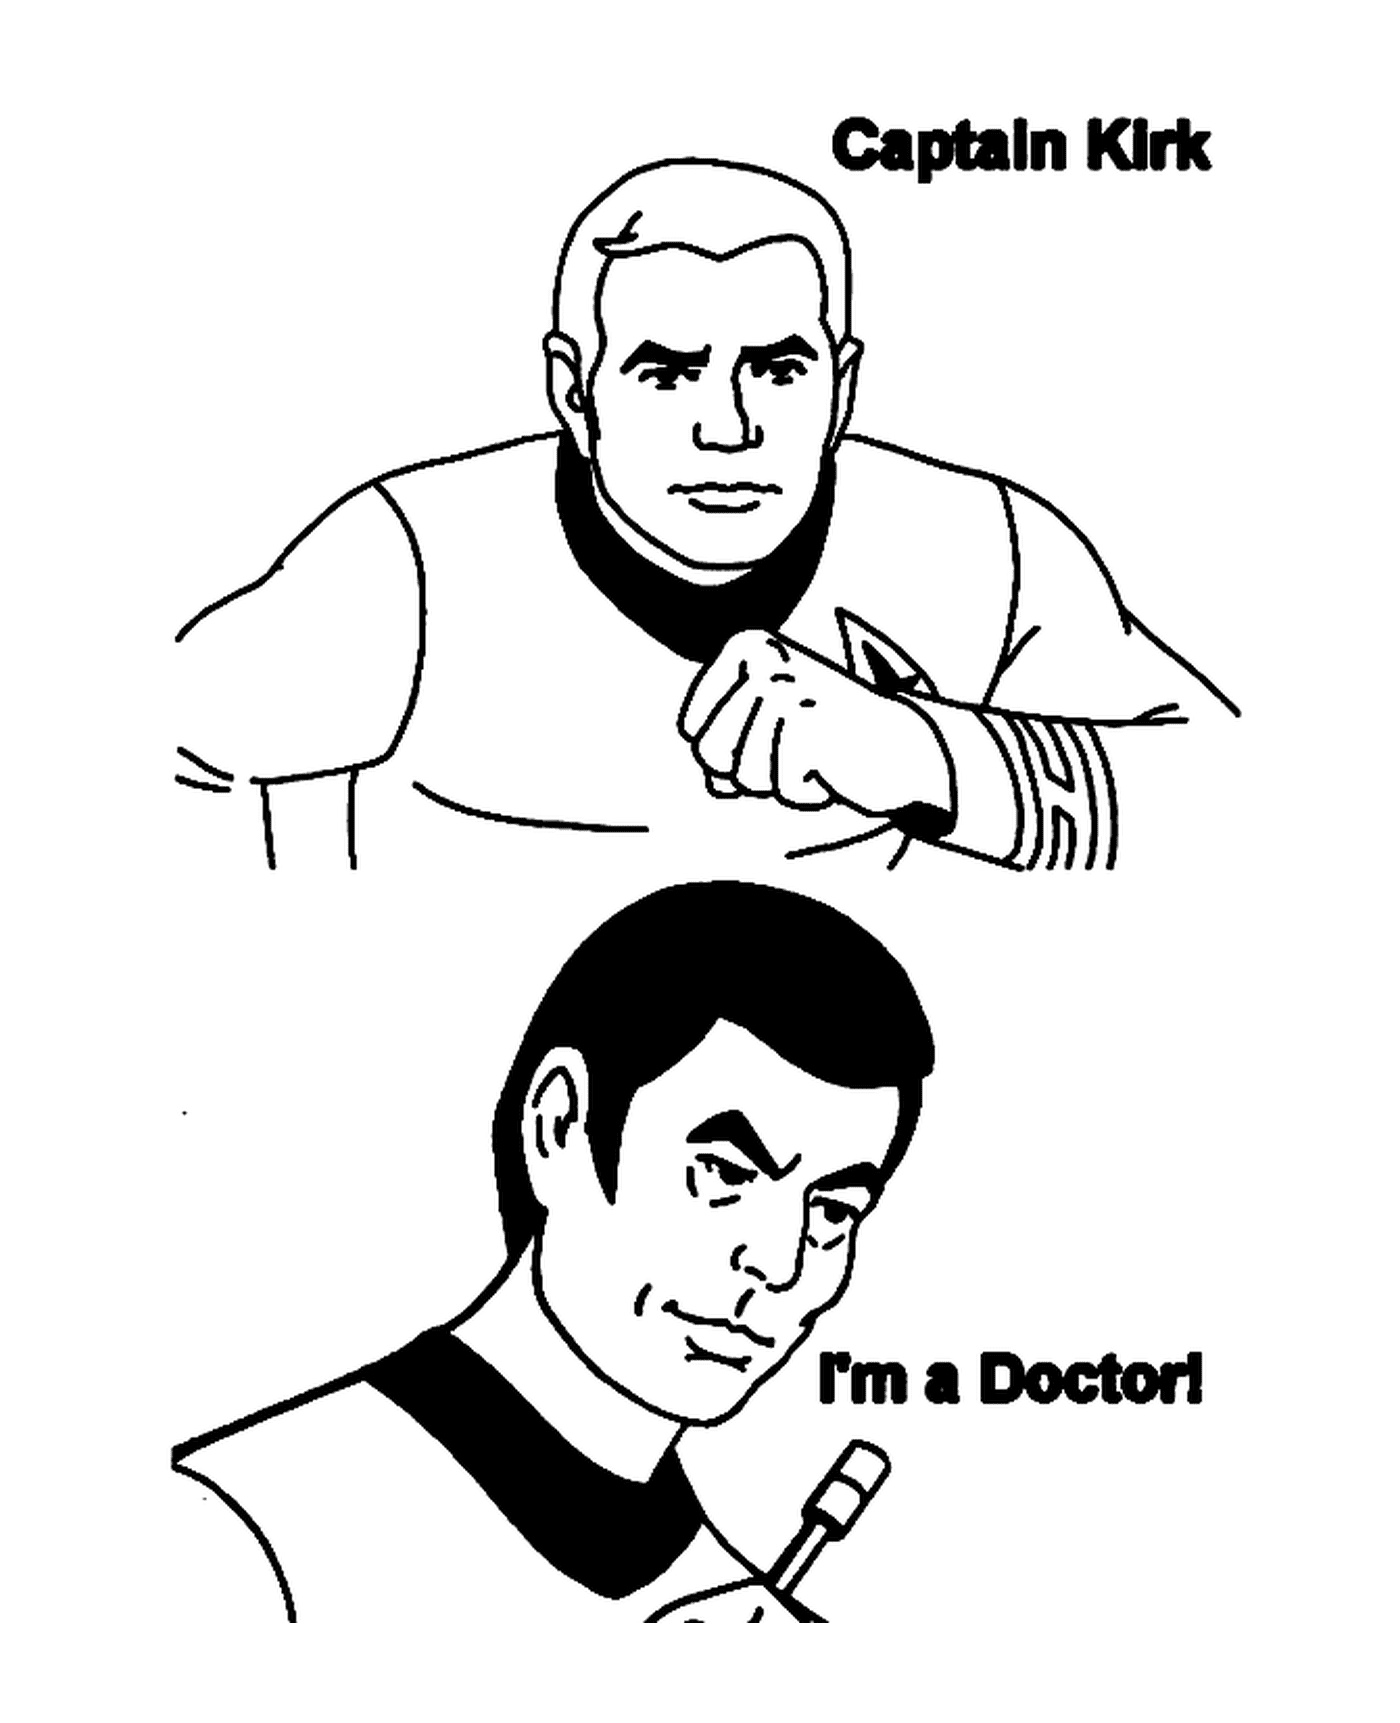  Il capitano Kirk e il dottor Star Trek 